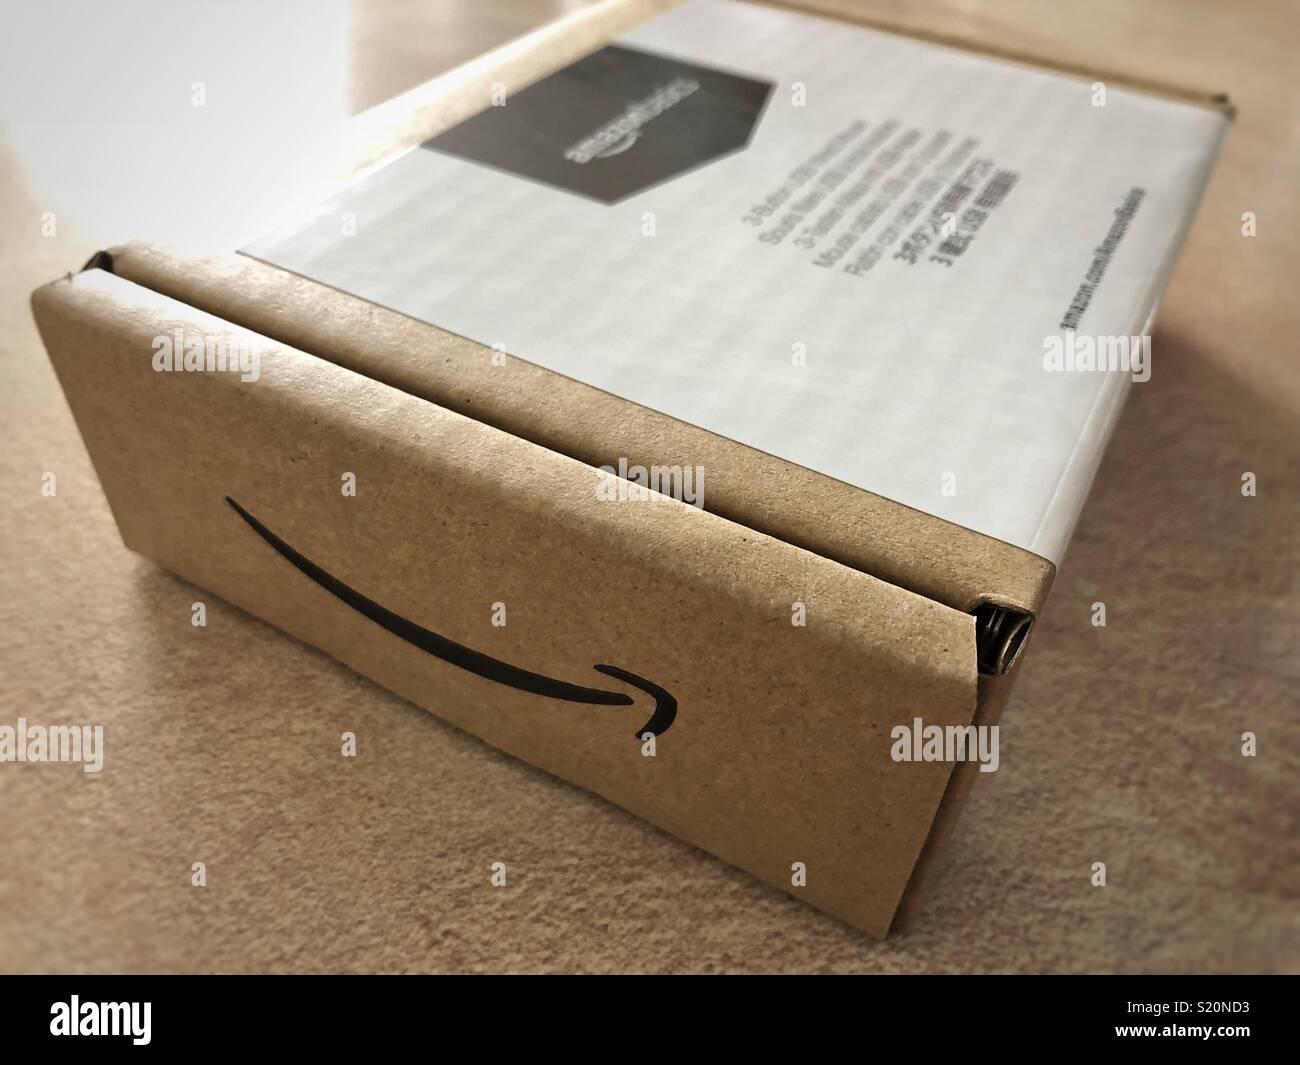 Amazon Karton. (Amazon Basics Verpackung Stockfotografie - Alamy